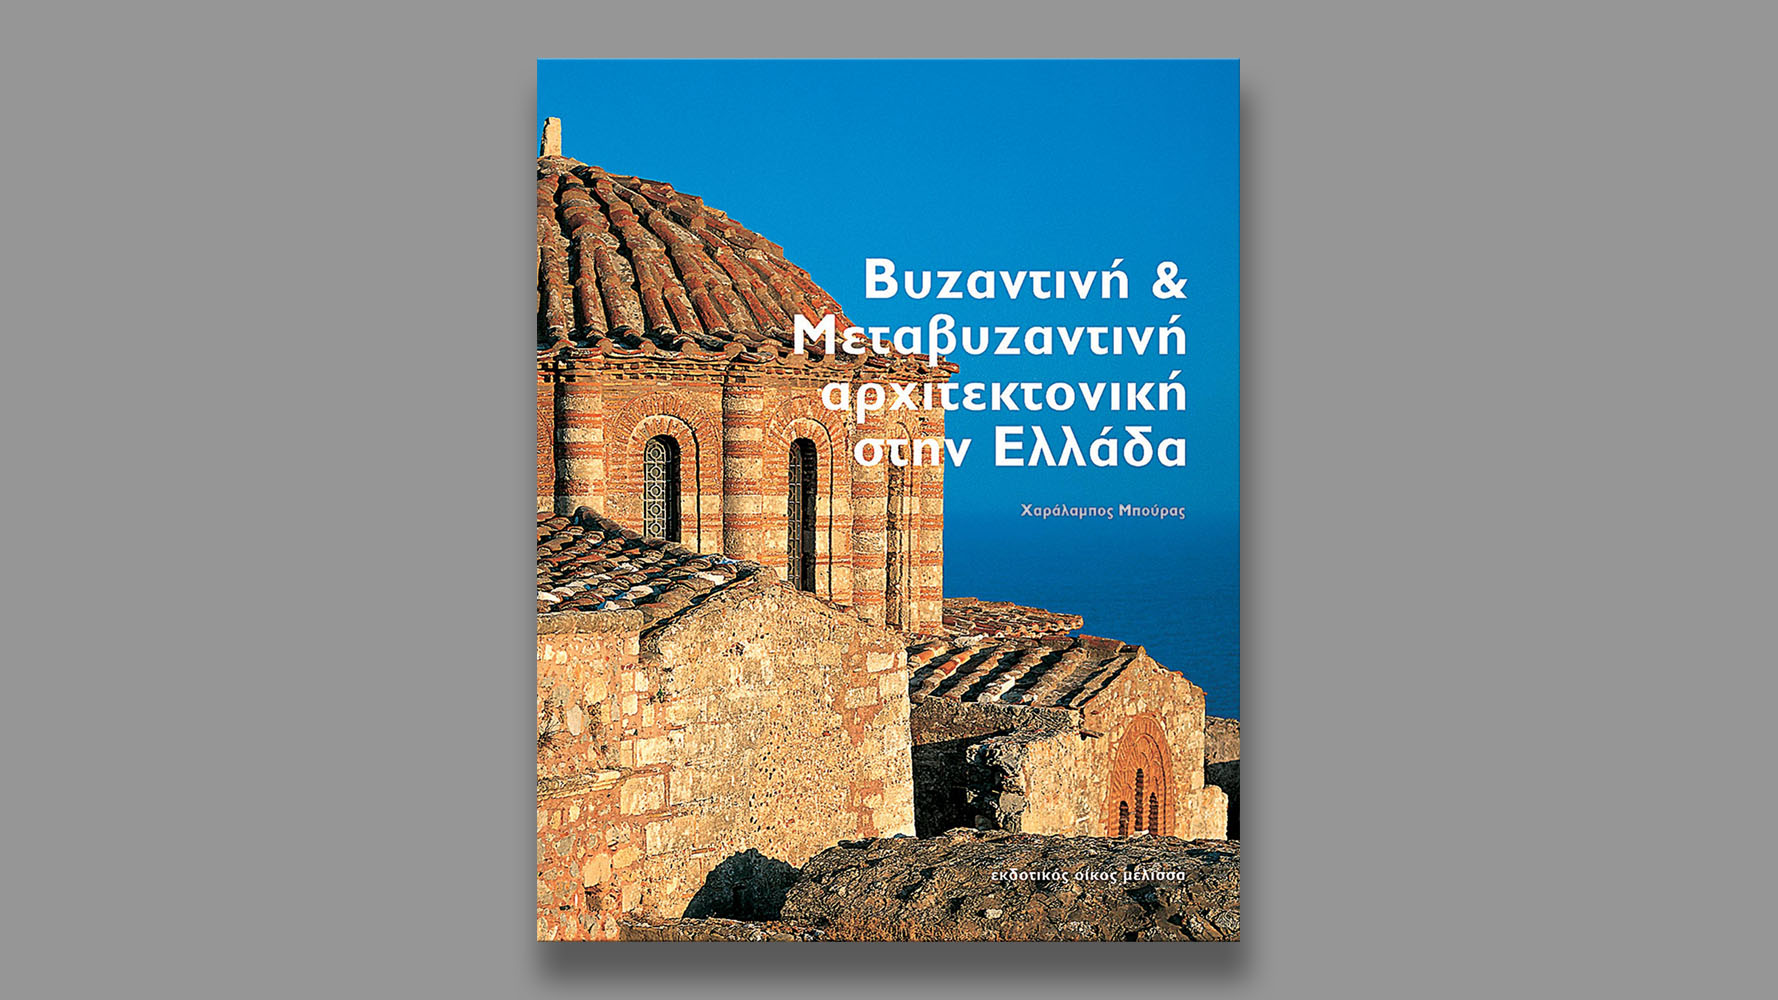 Byzantine and Post Byzantine Architecture in Greece, Melissa books, 2001